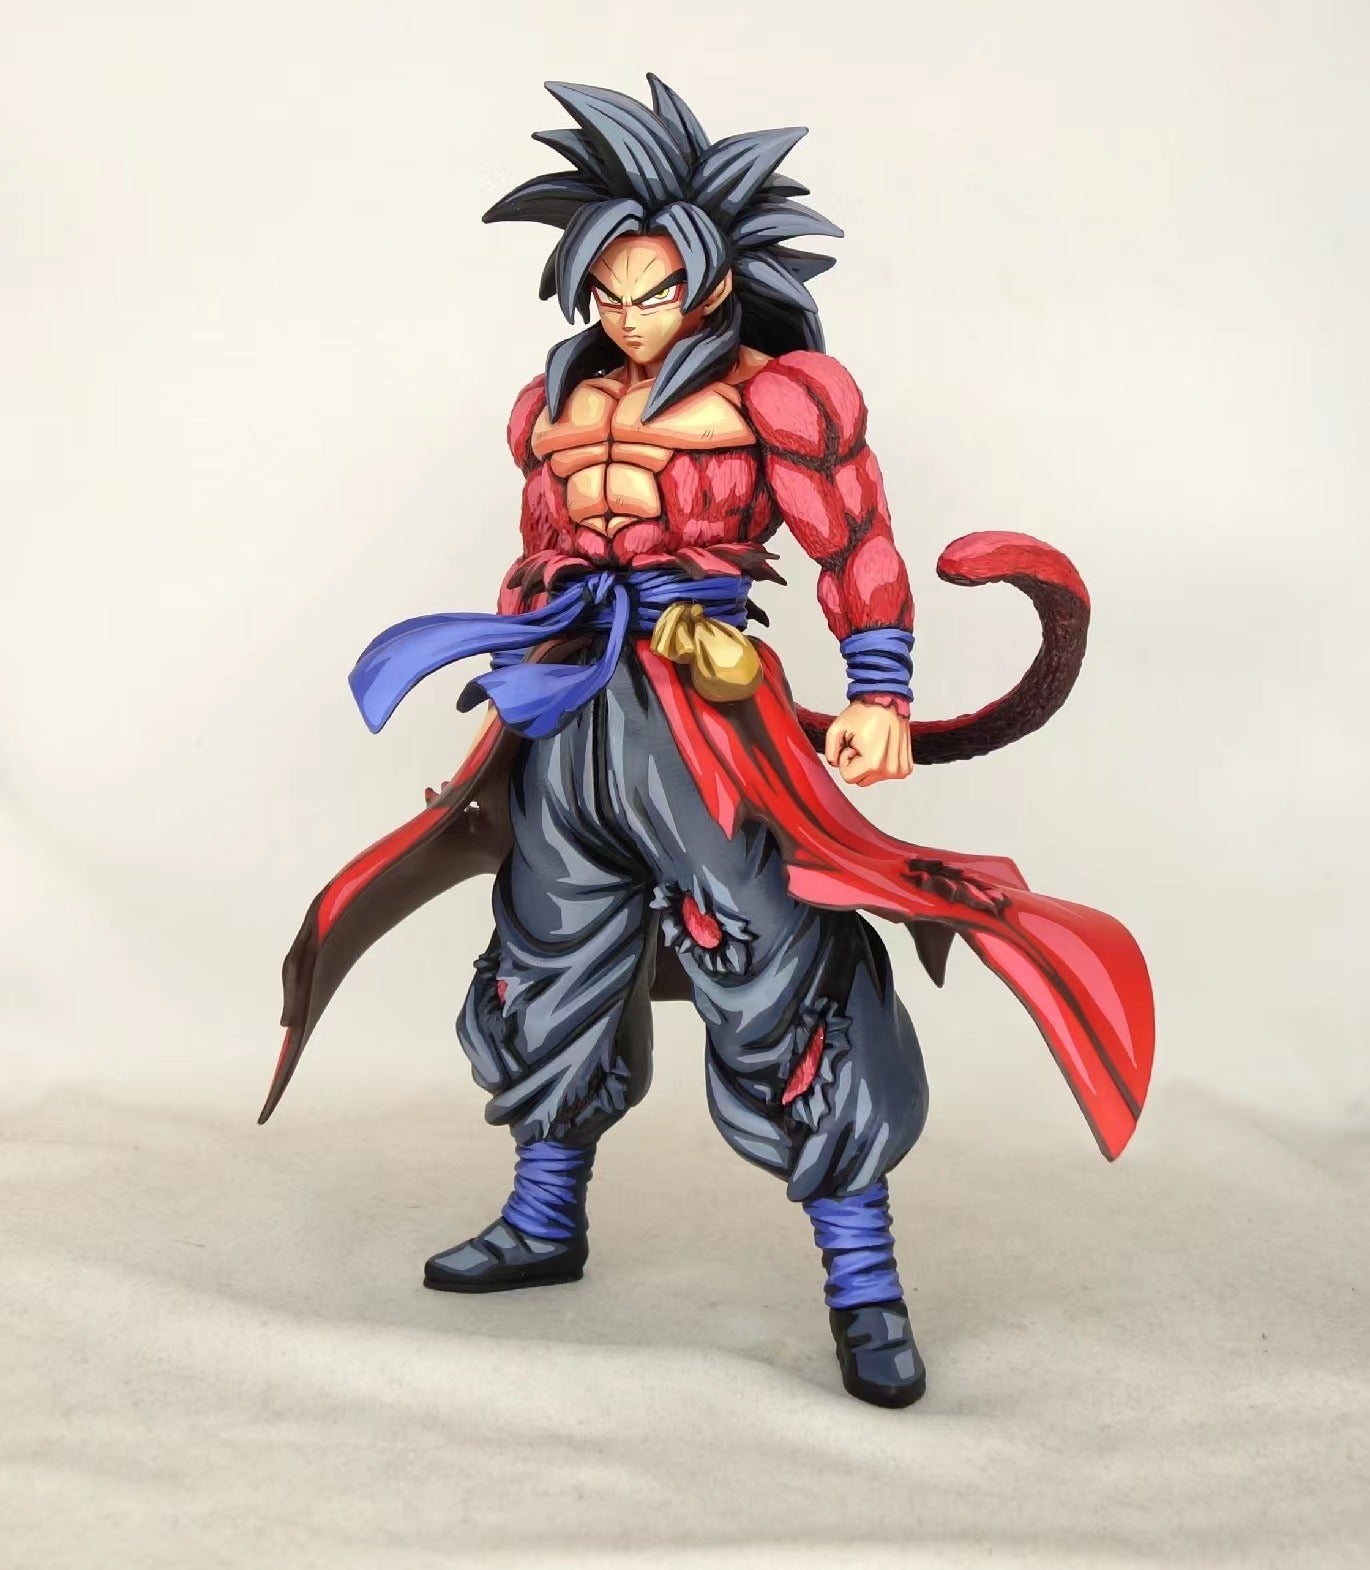 Goku Super Saiyan 4 Figure with Comic Color Effect – Lyk Repaint